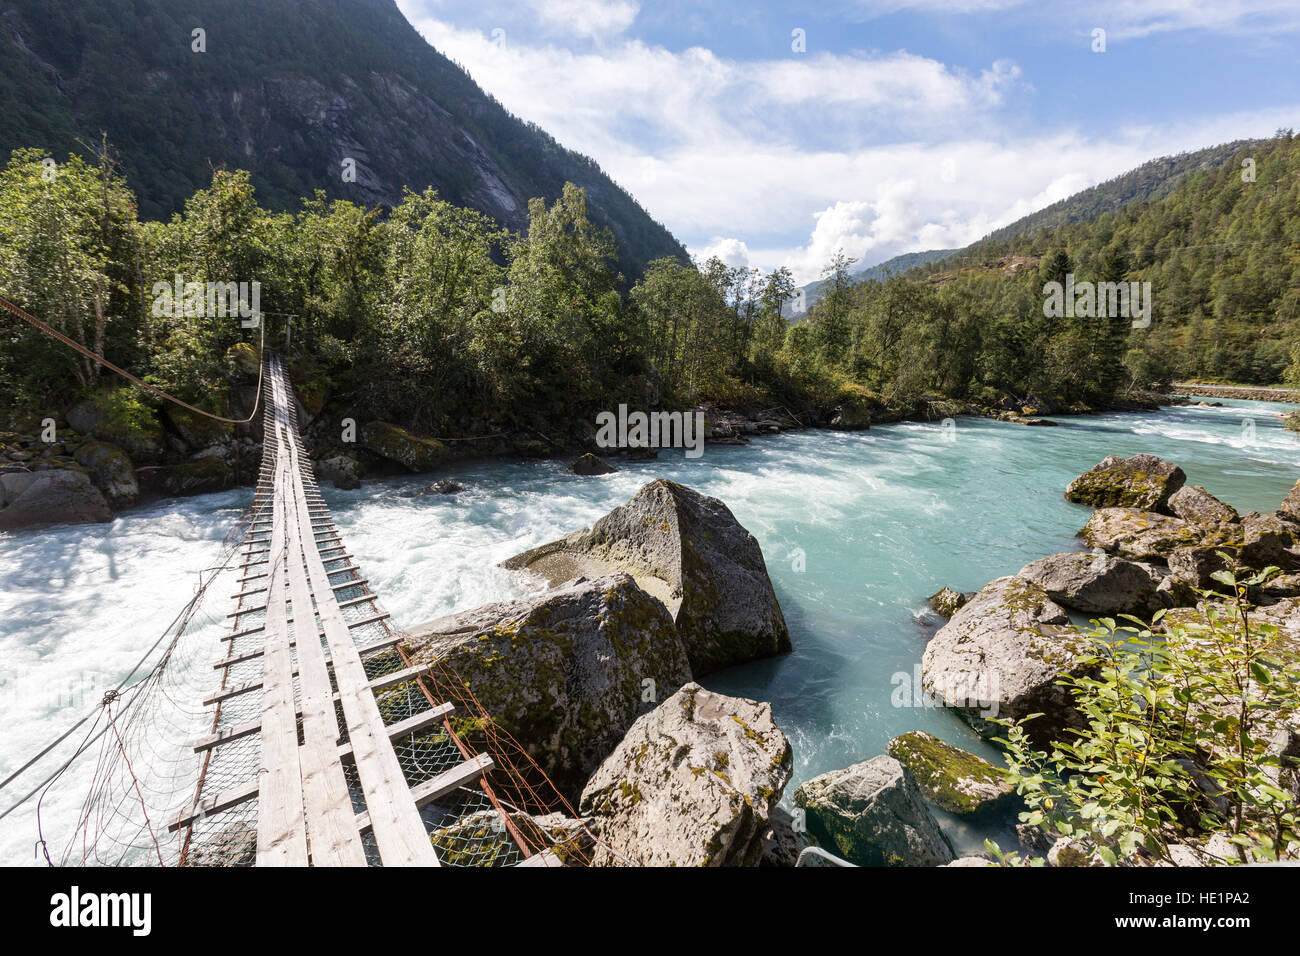 Norway jostedal selva rafting wild water rafting dangerous bridge hi-res  stock photography and images - Alamy